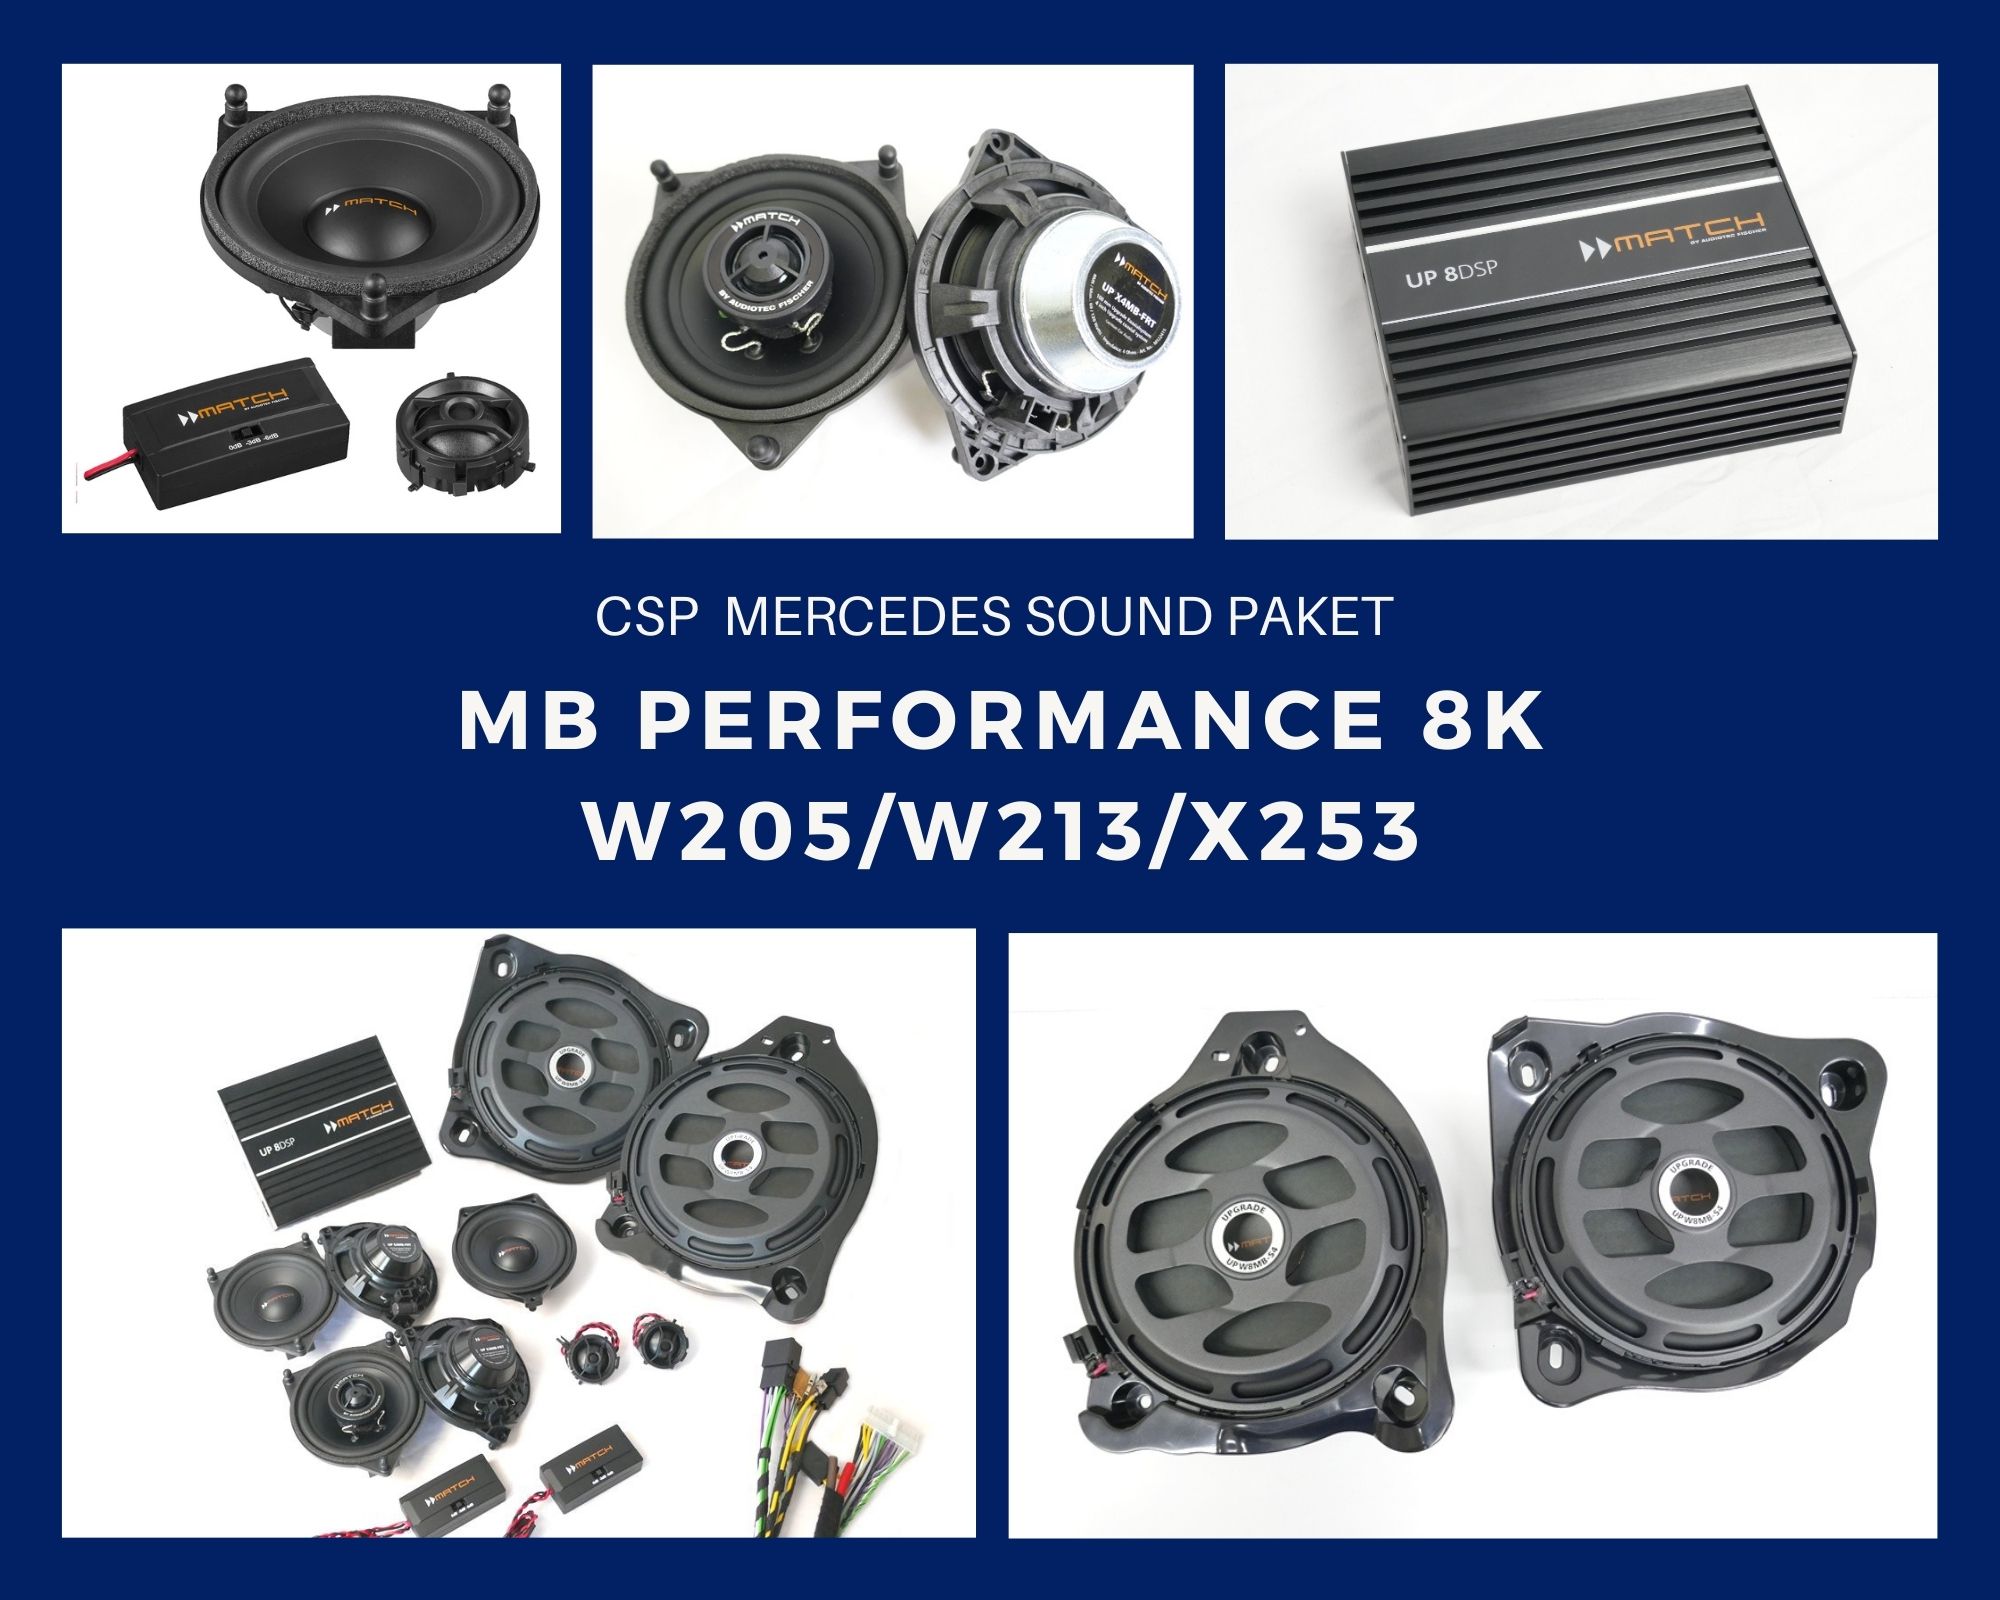 CSP Sound Paket Performance 8K Mercedes W205 W213 X253